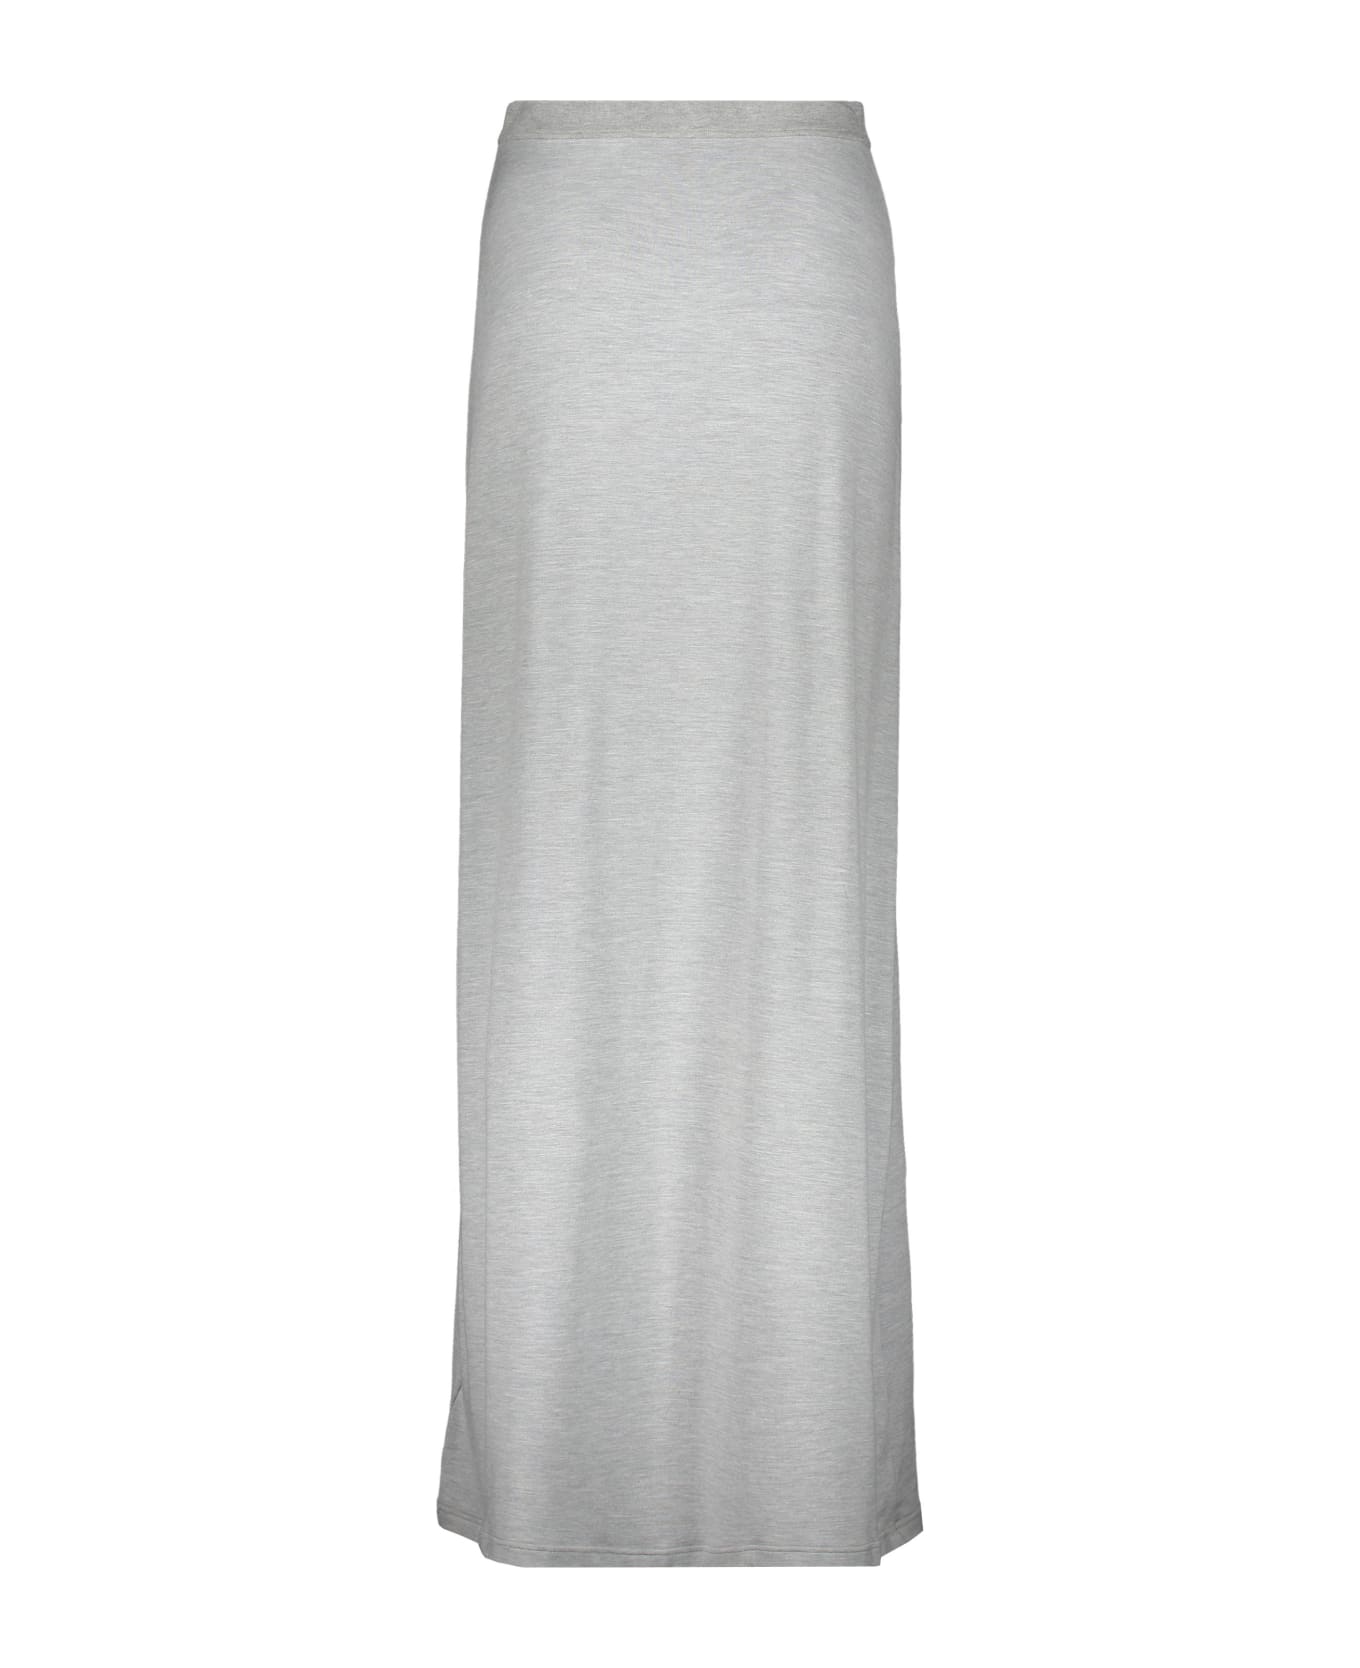 Burberry Long Skirt - grey スカート